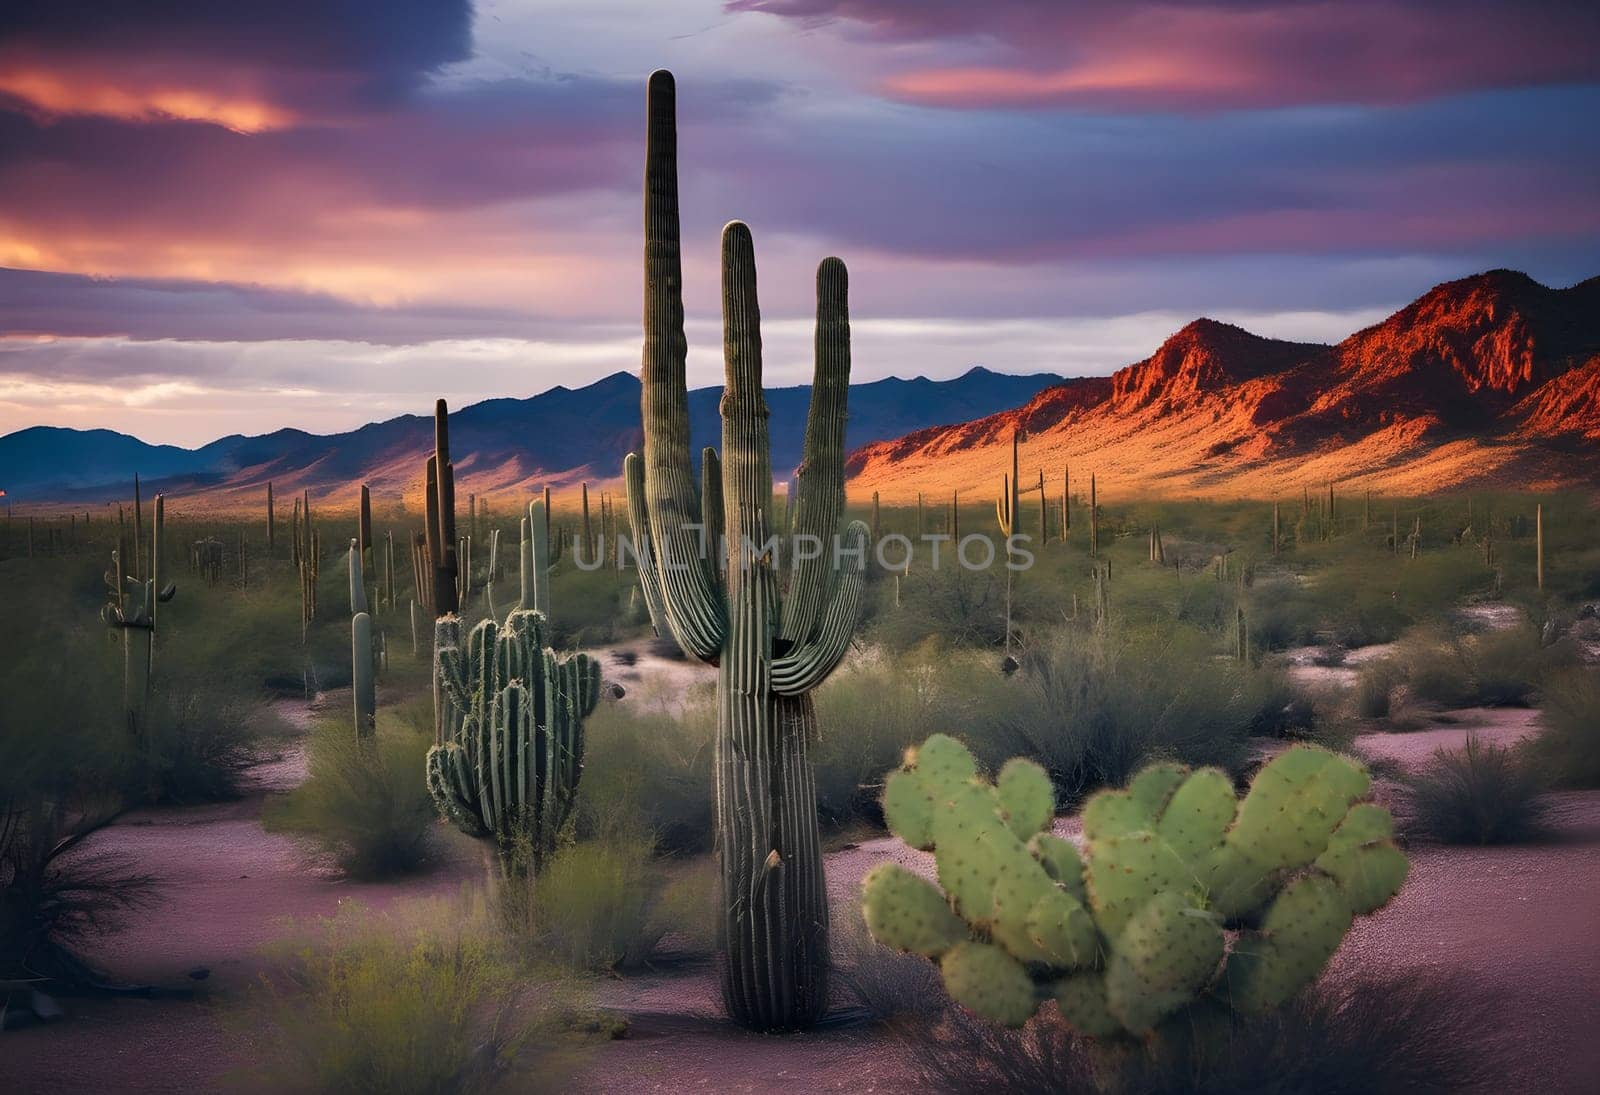 Desert Dreams: Saguaro Silhouettes in Arizona's Sunset